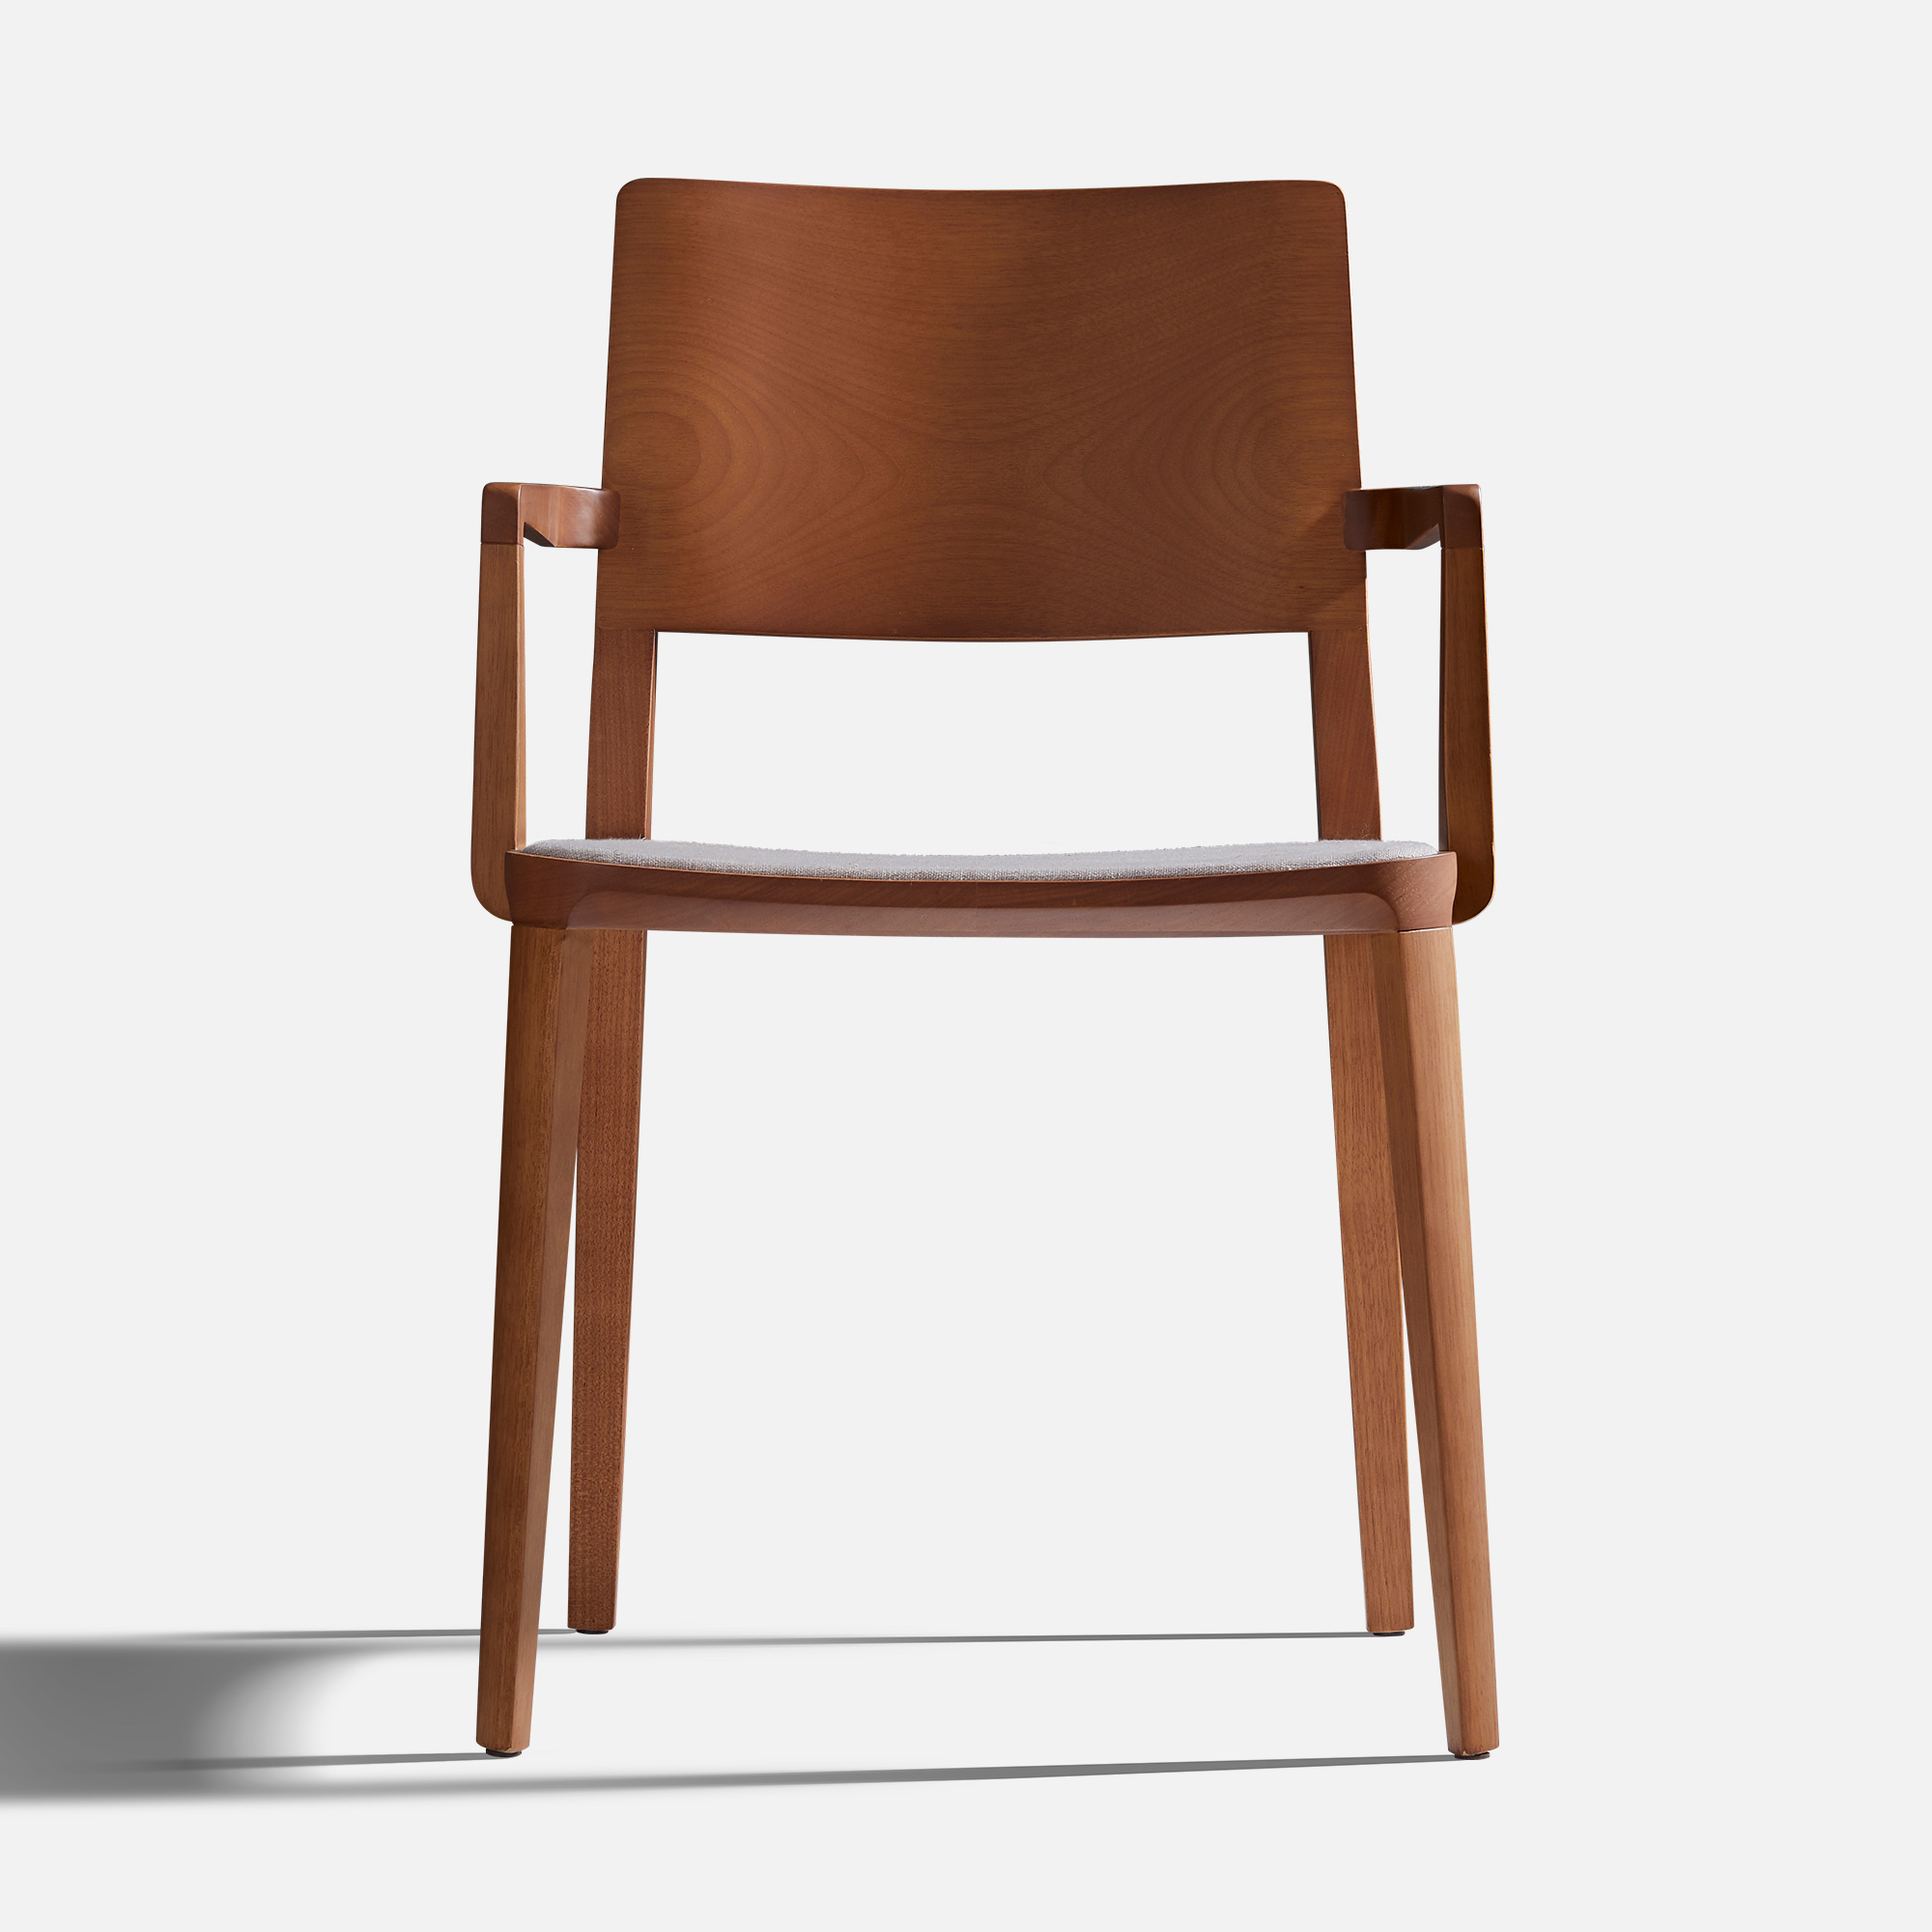 Evo - Chairs